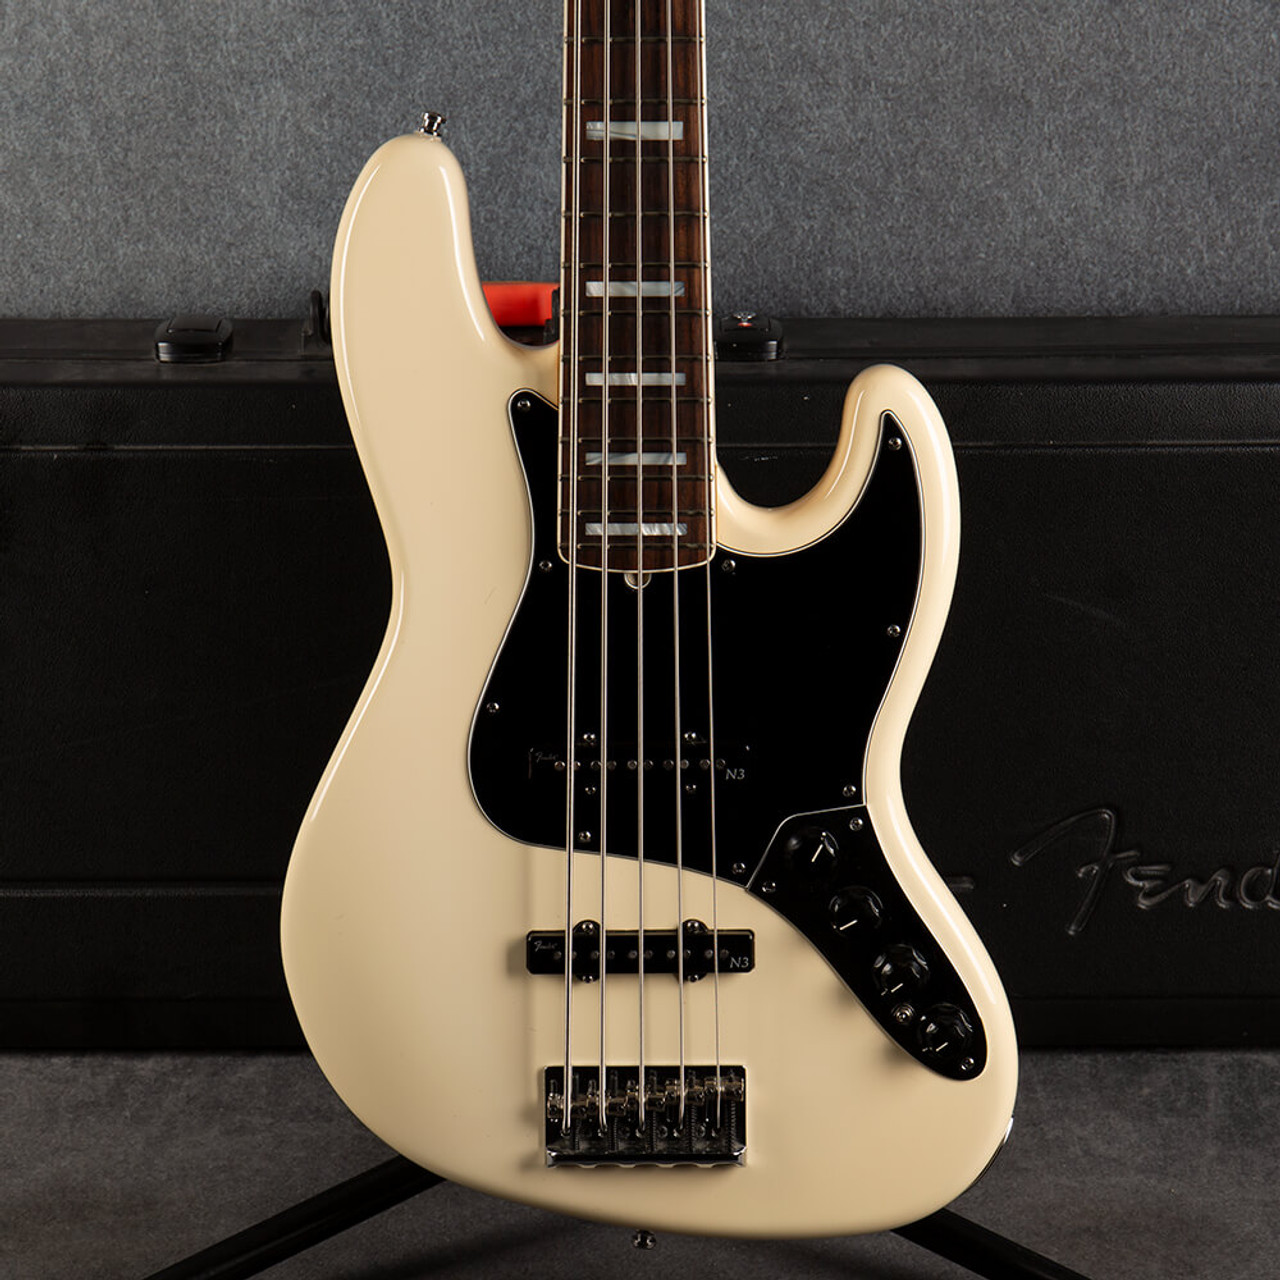 Fender american deluxe jazz bass N3 - ベース